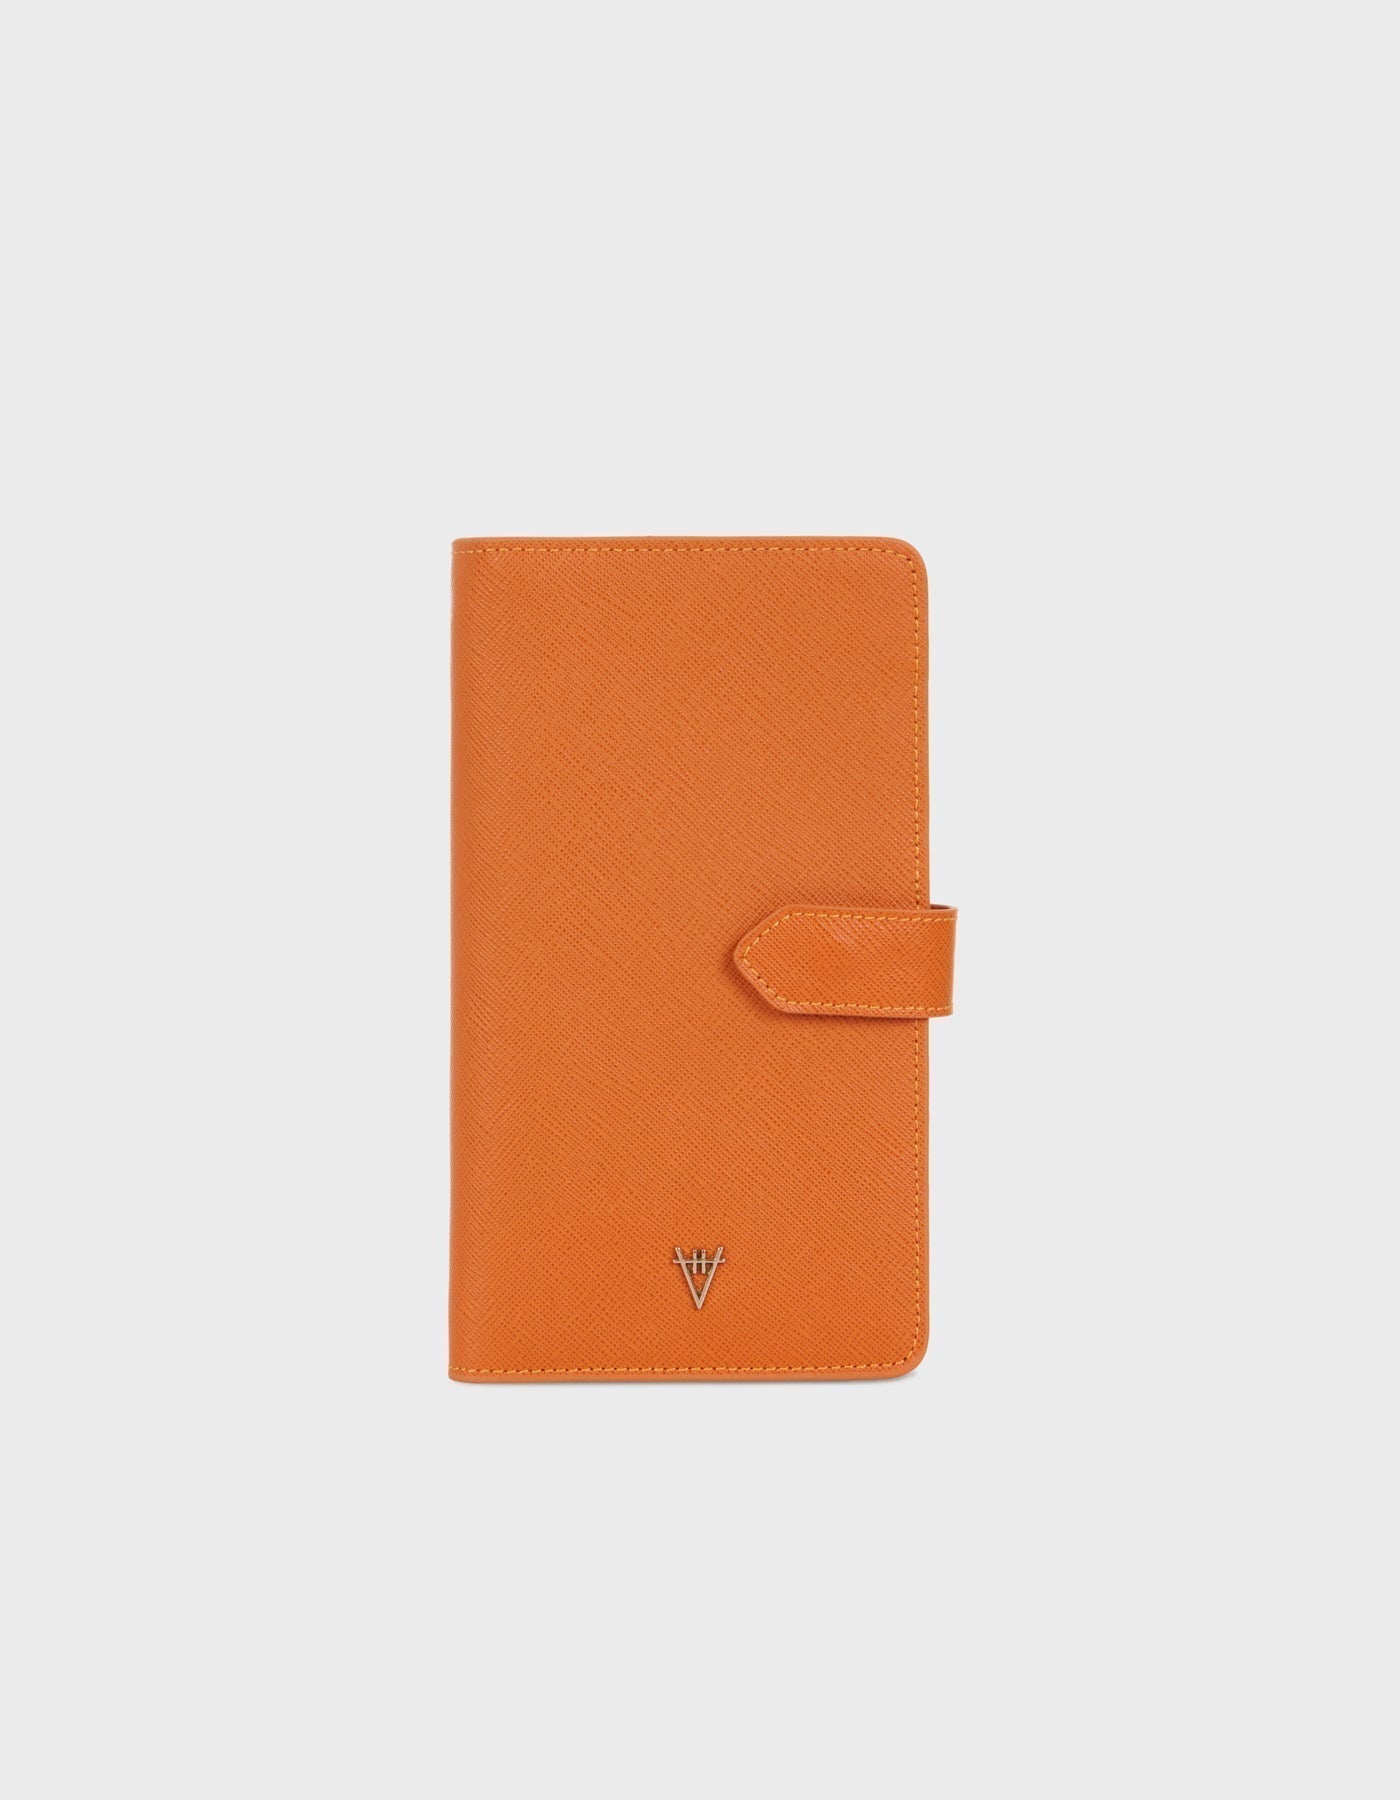 HiVa Atelier | Ita Crossbody Bag and Wallet Burnt Orange | Beautiful and Versatile